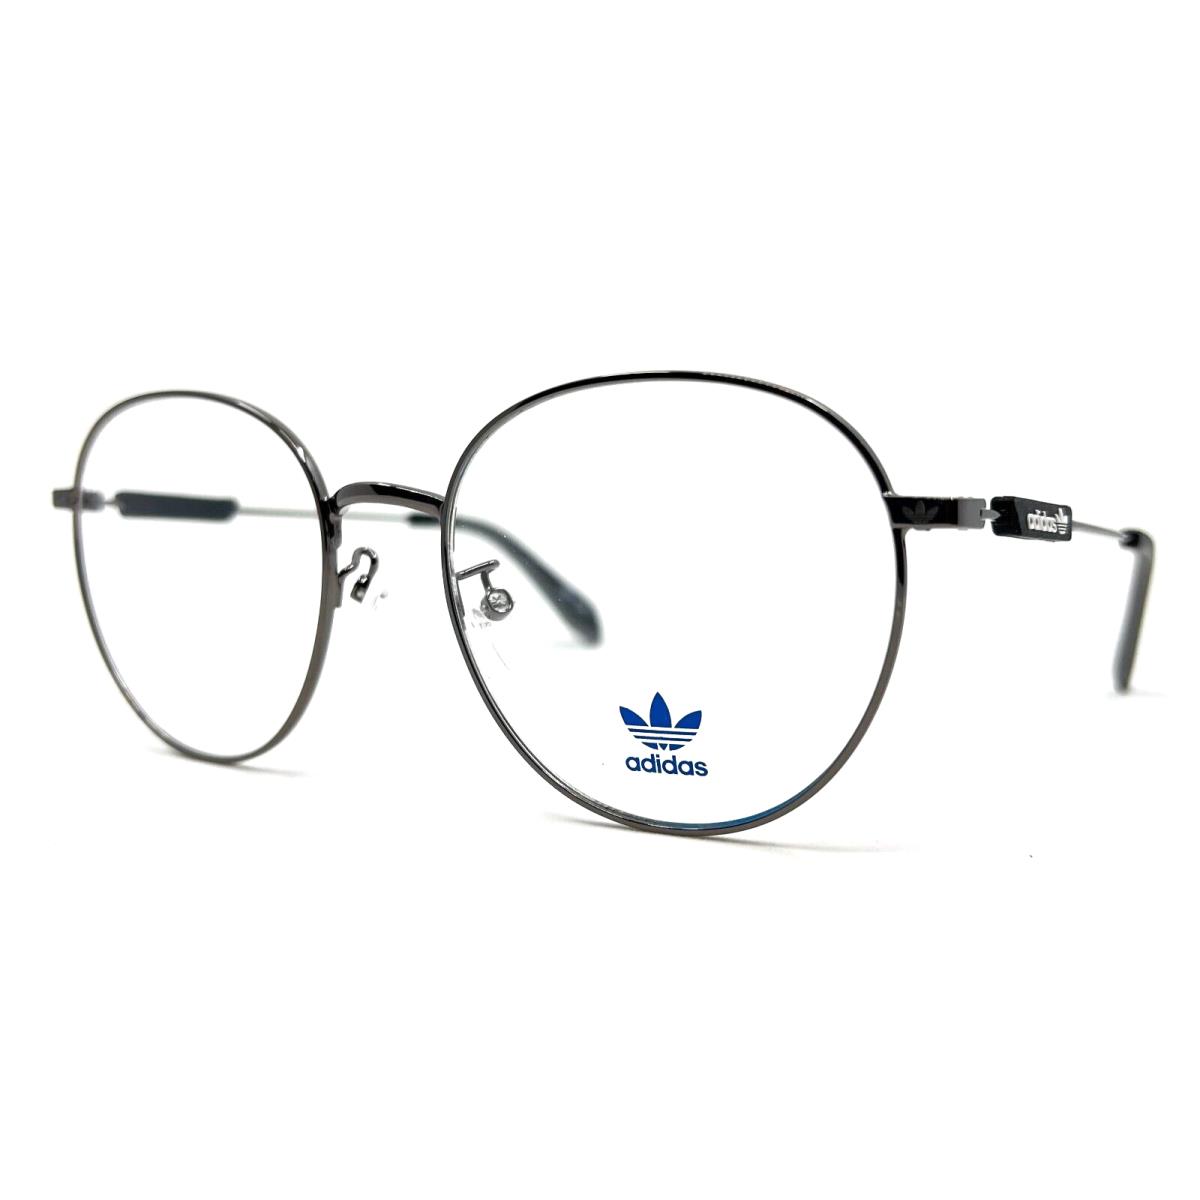 Adidas Originals - OR5033 012 54/19/145 - Gun - Eyeglasses Case